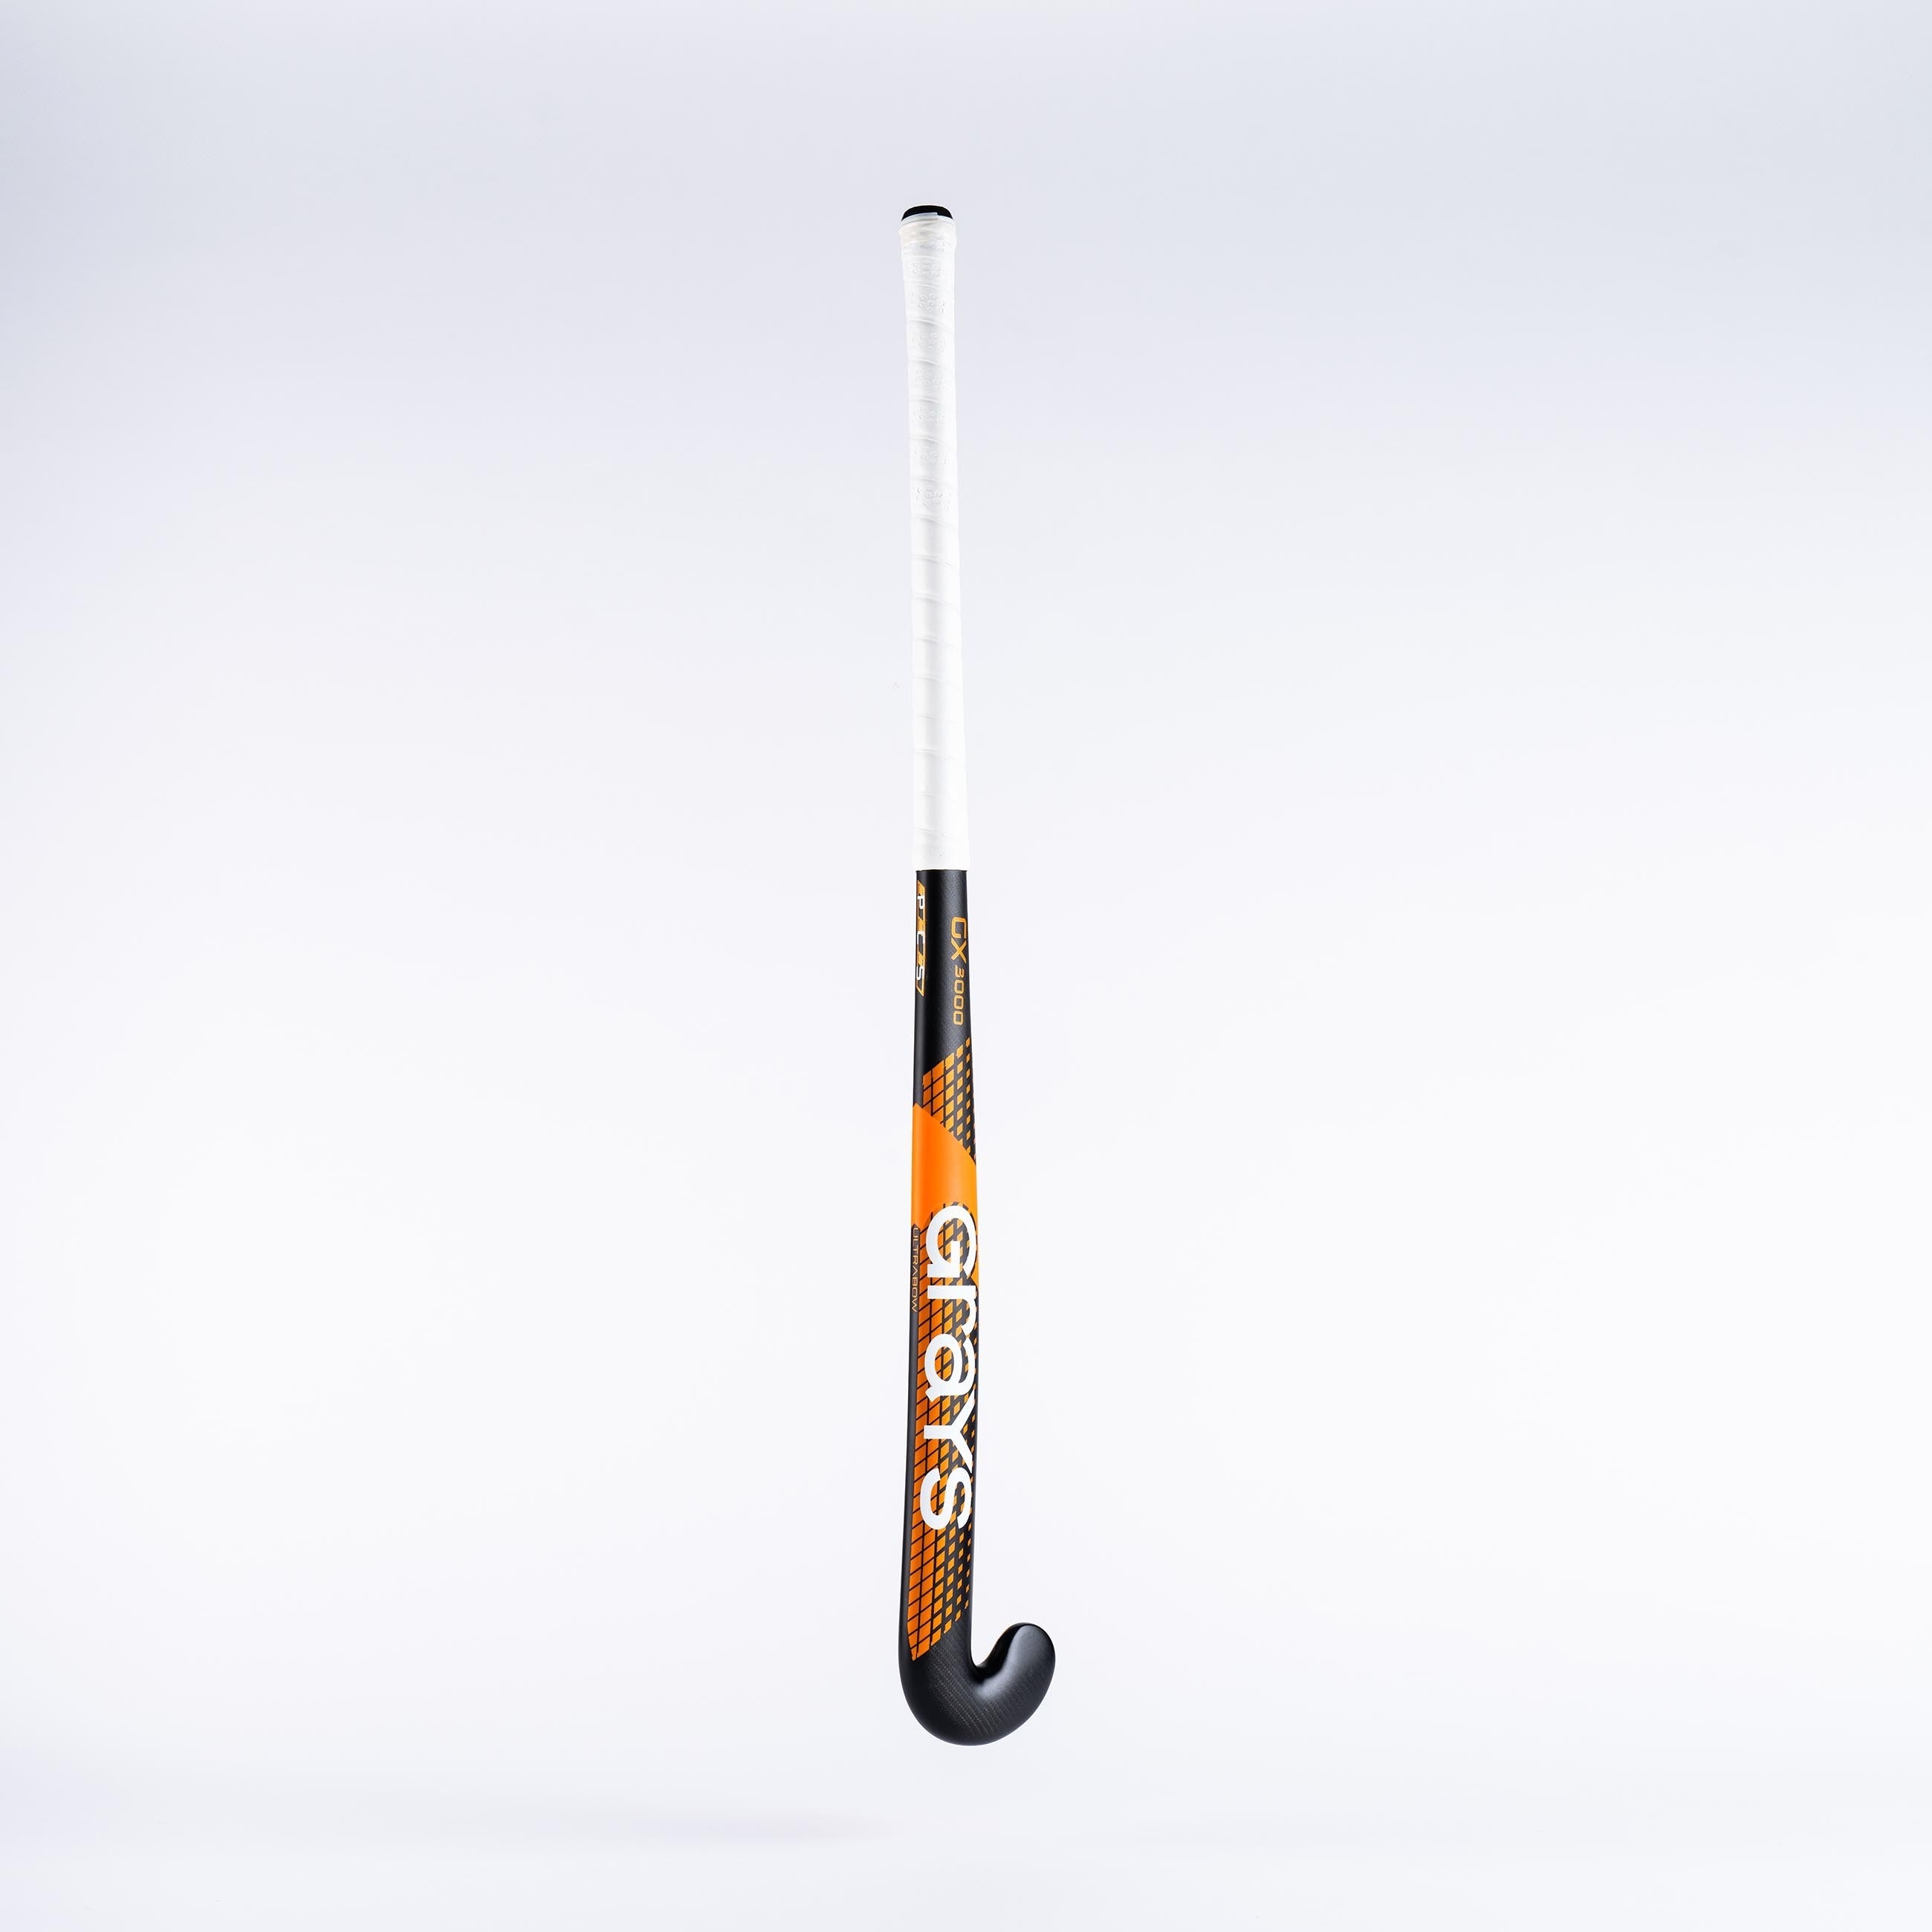 HACB23Composite Sticks GX3000 UB Micro 50  Black & Orange, 1 Angle